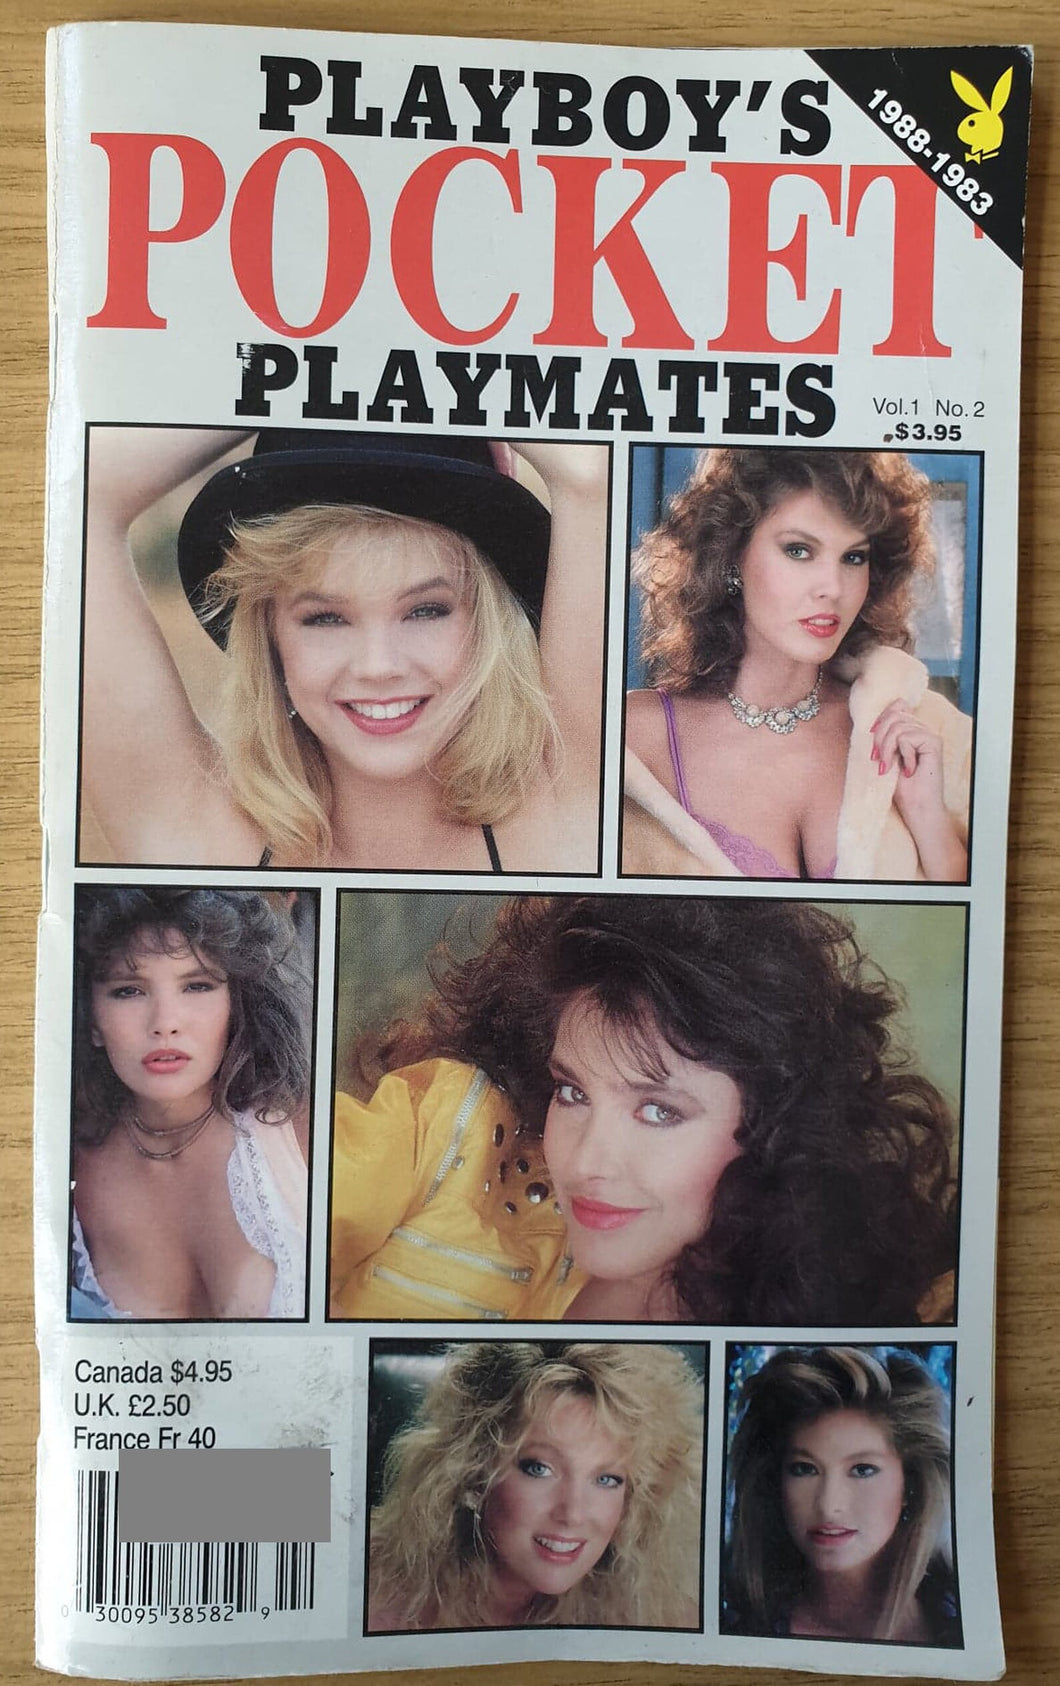 Playboy's Pocket Playmates vol 1 no 2 1996